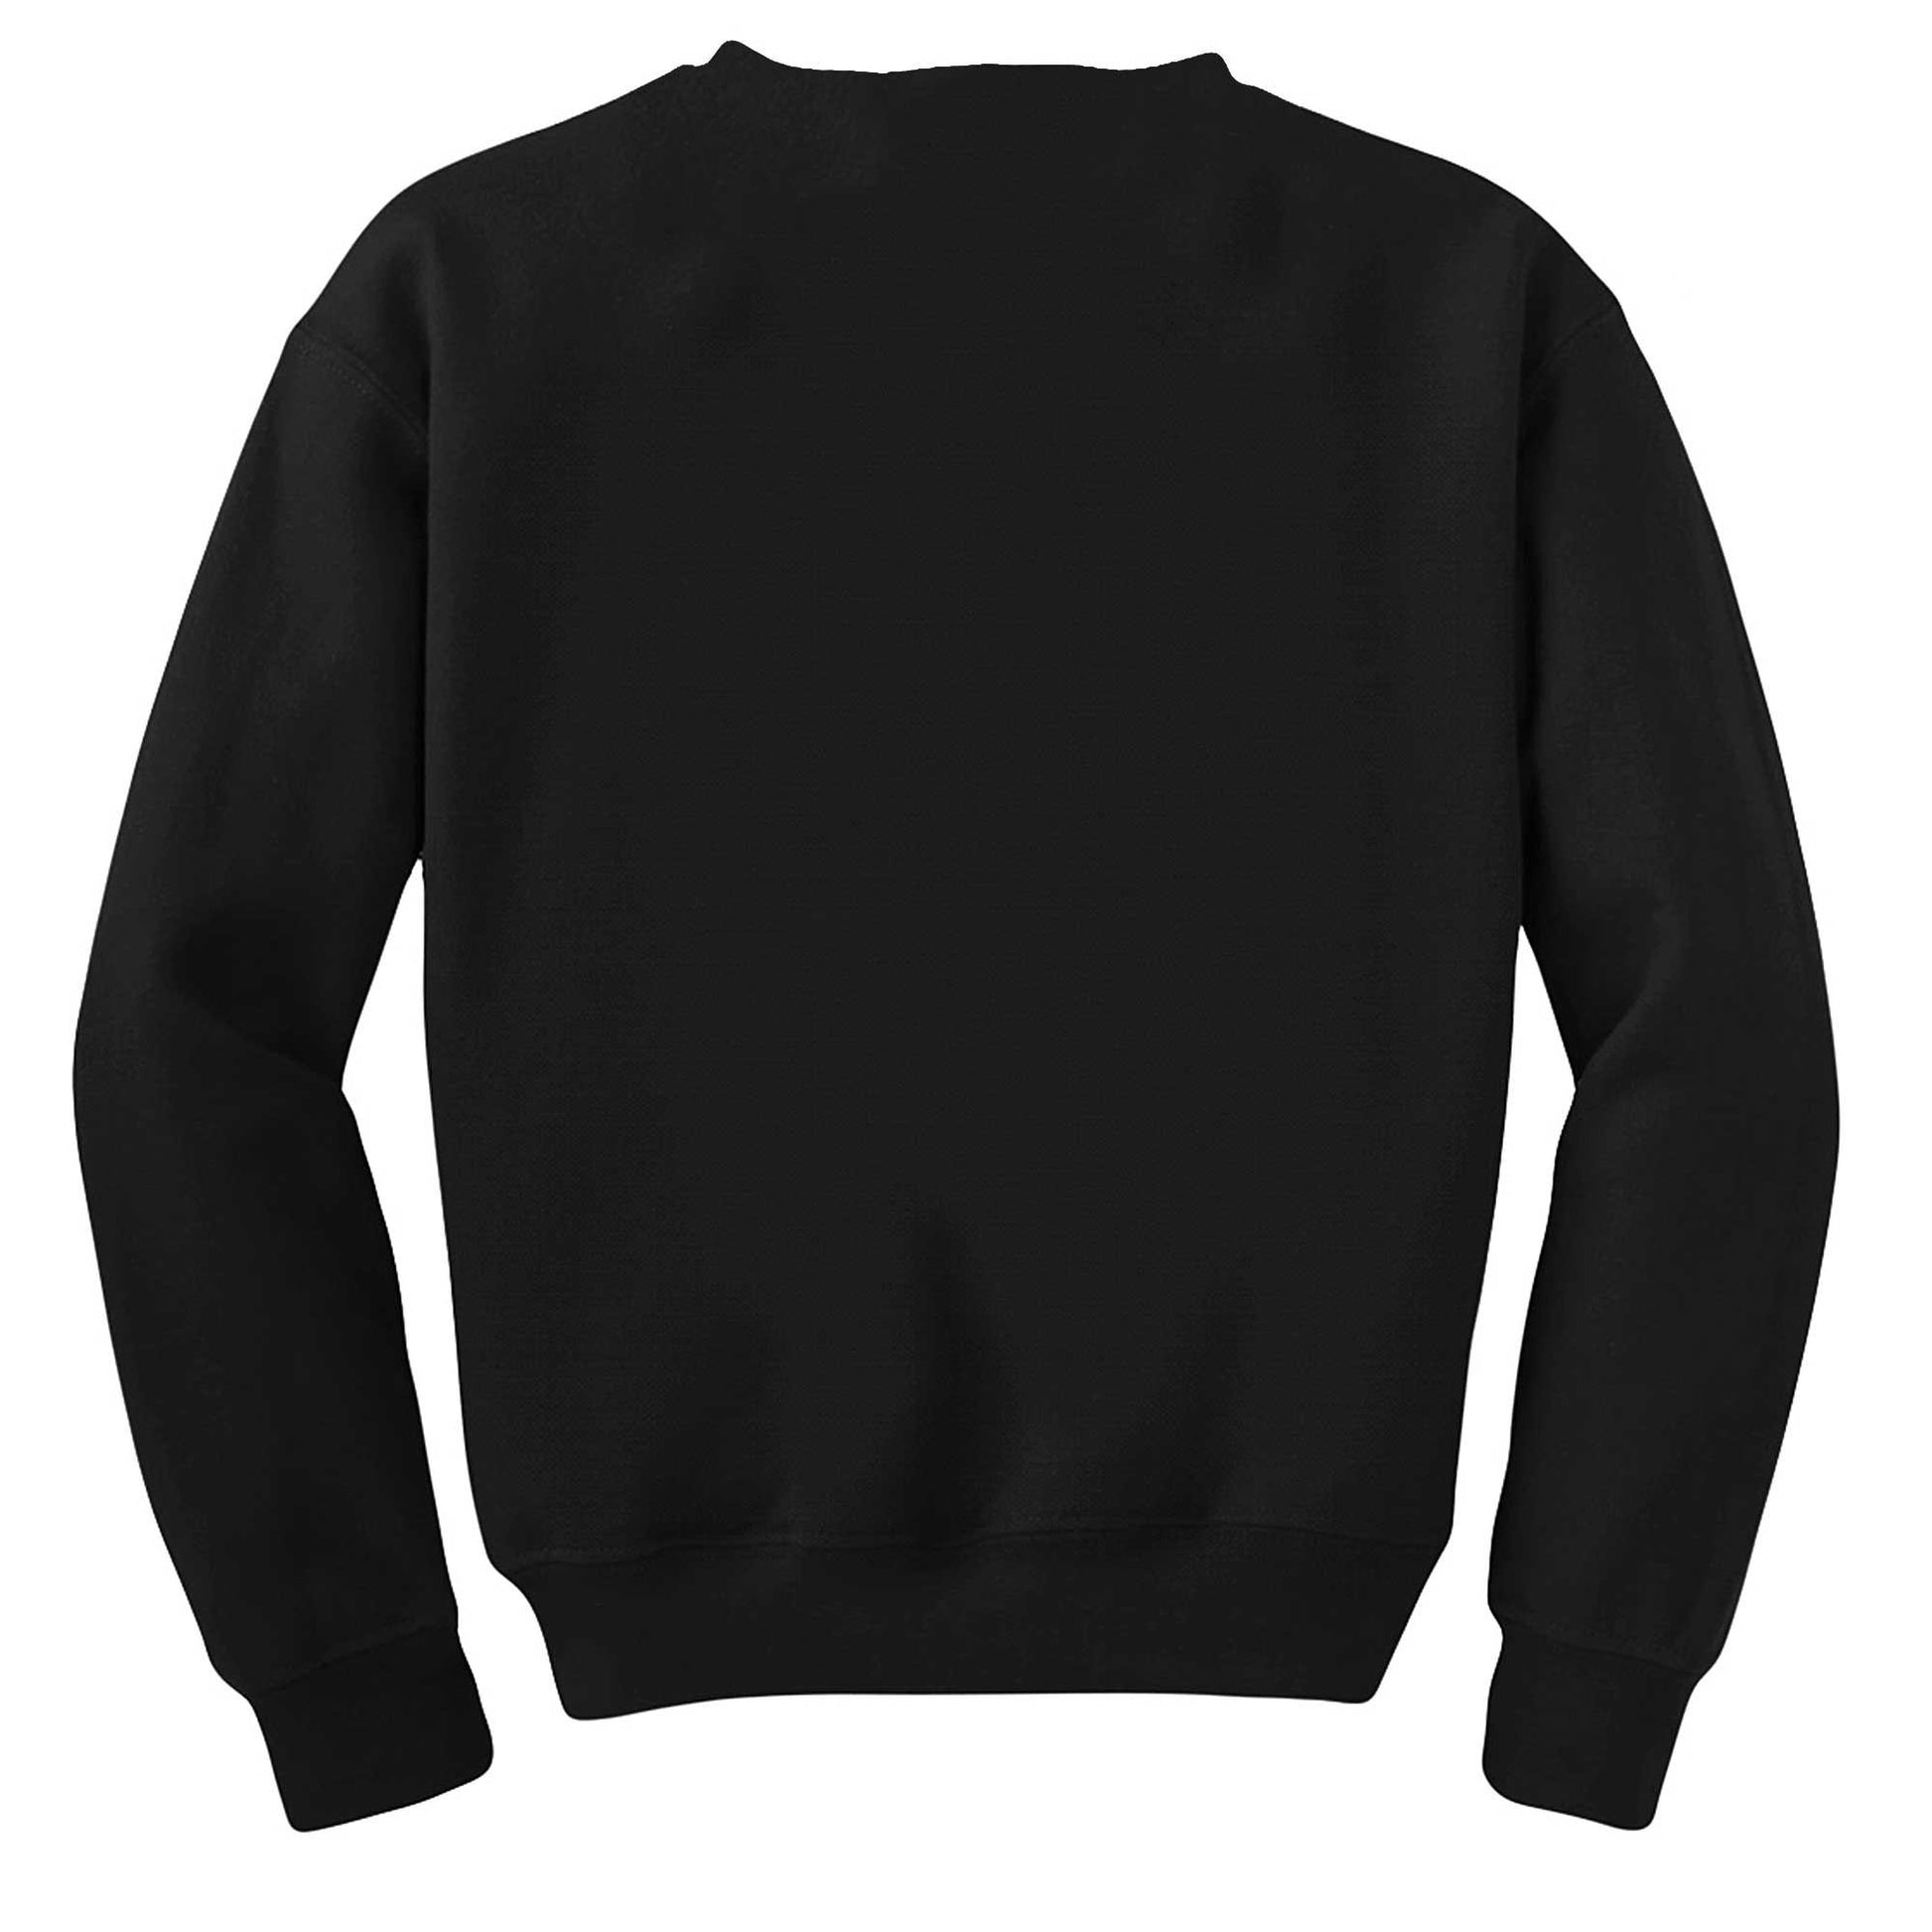 Tır Silüet Siyah Sweatshirt - Zepplingiyim